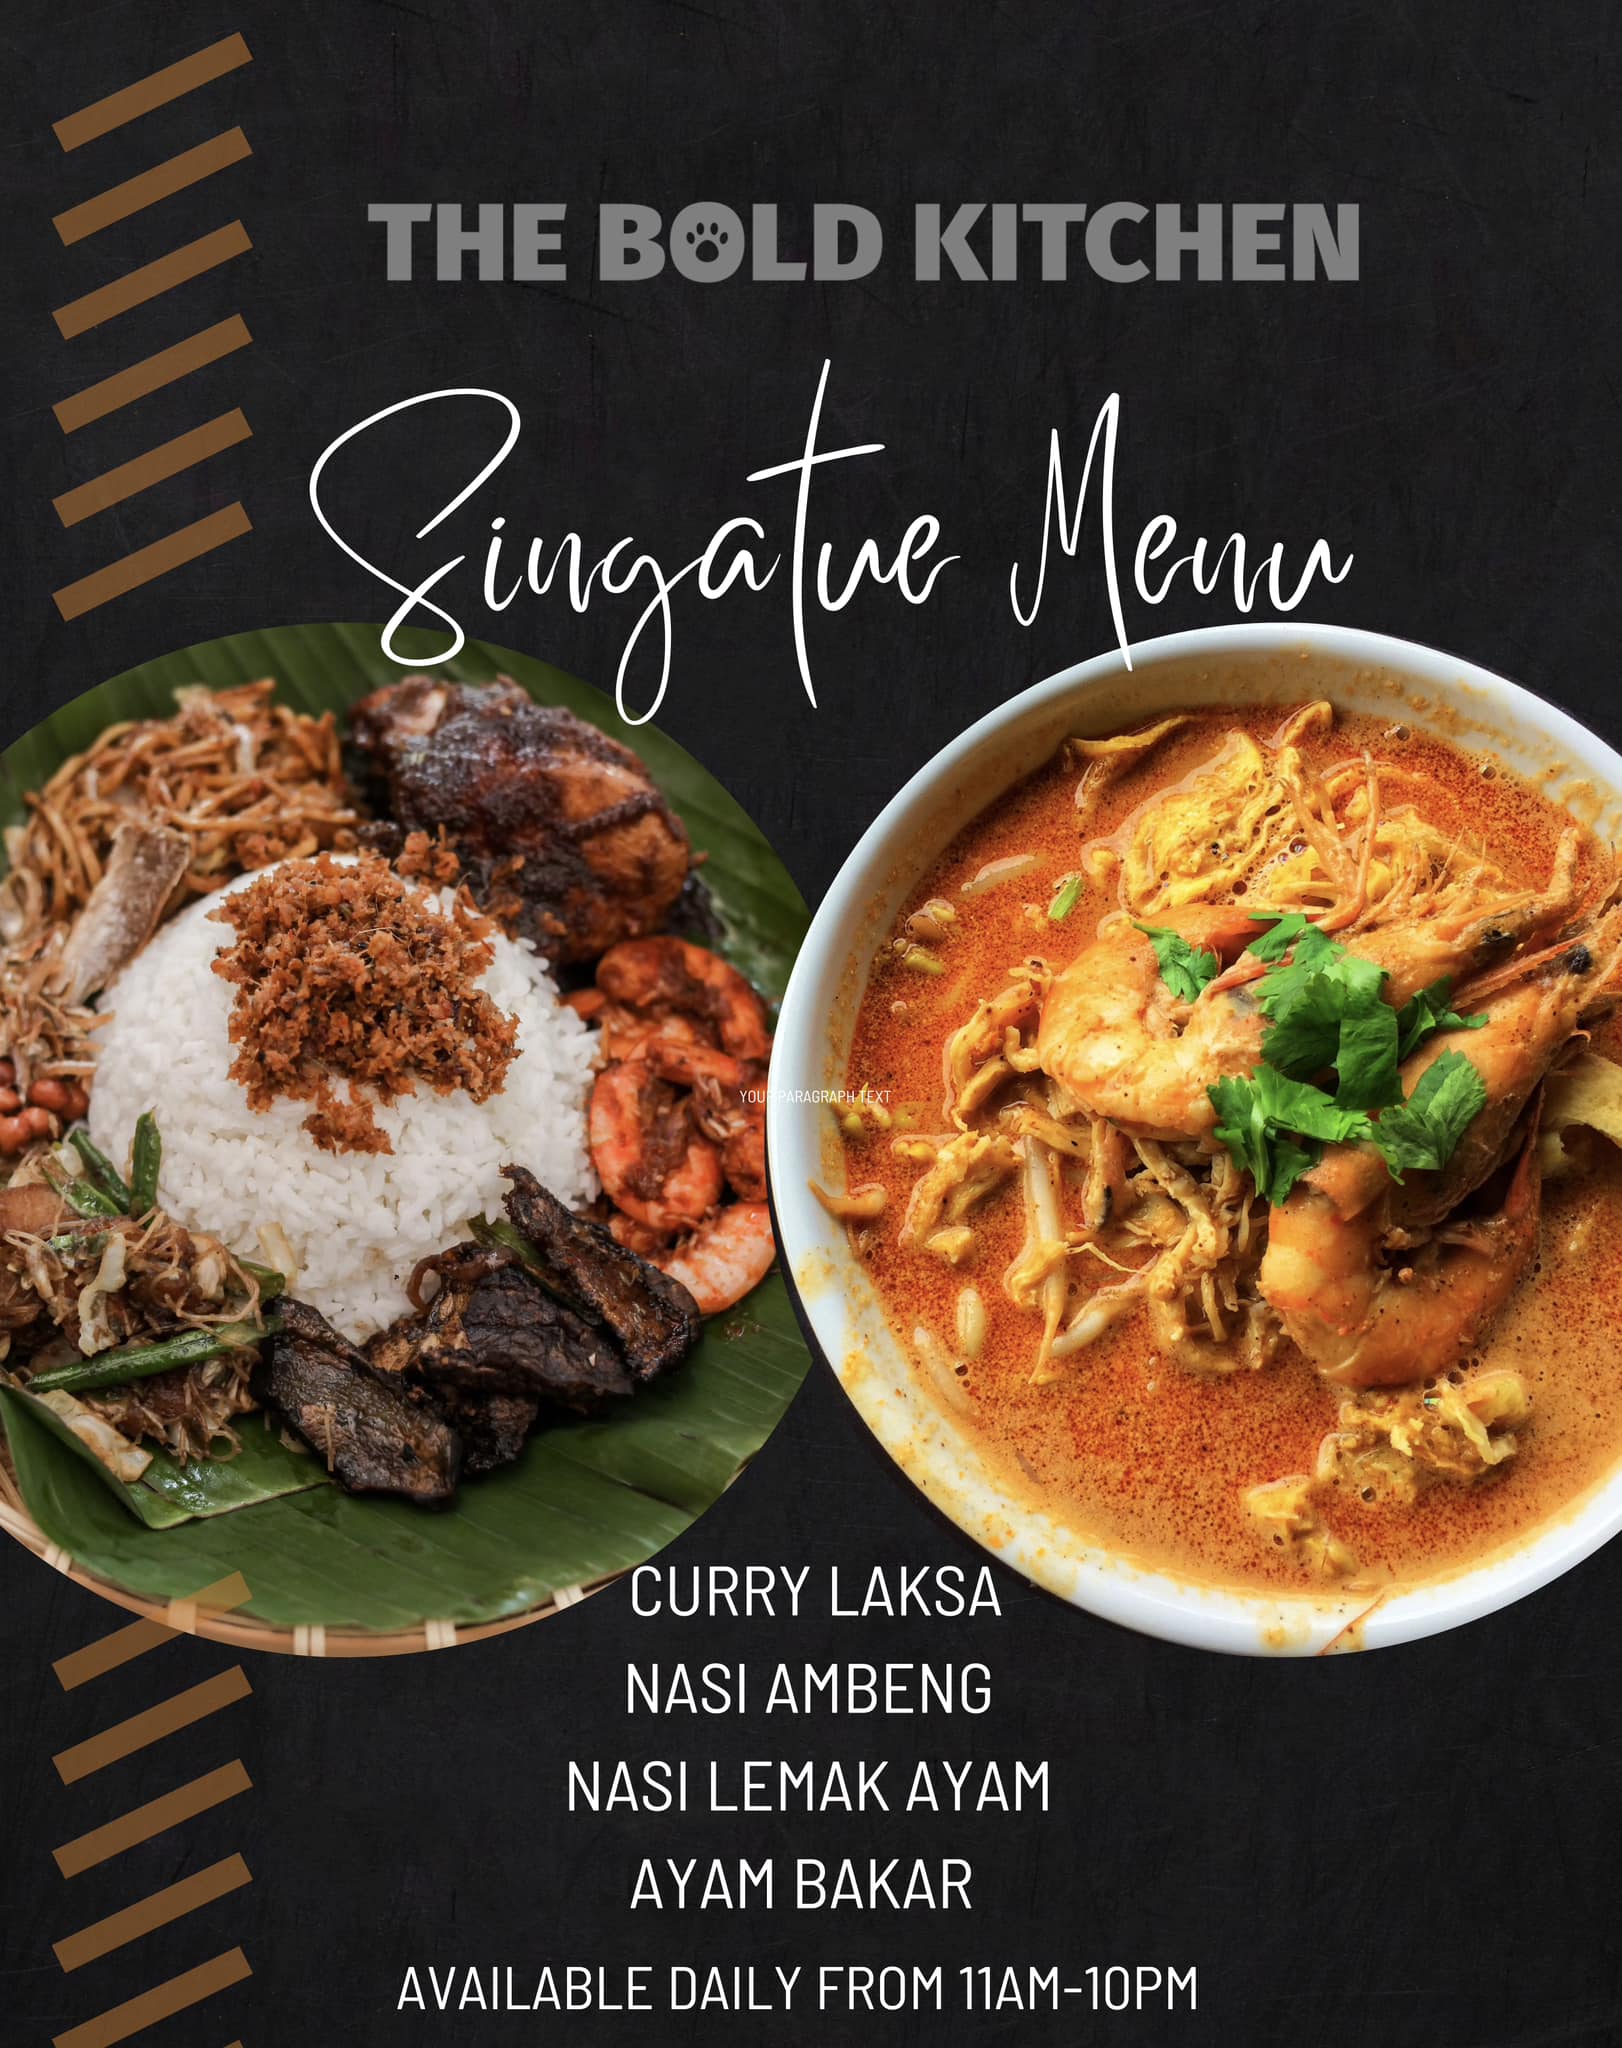 The Bold Kitchen - Signature Menu promotional poster